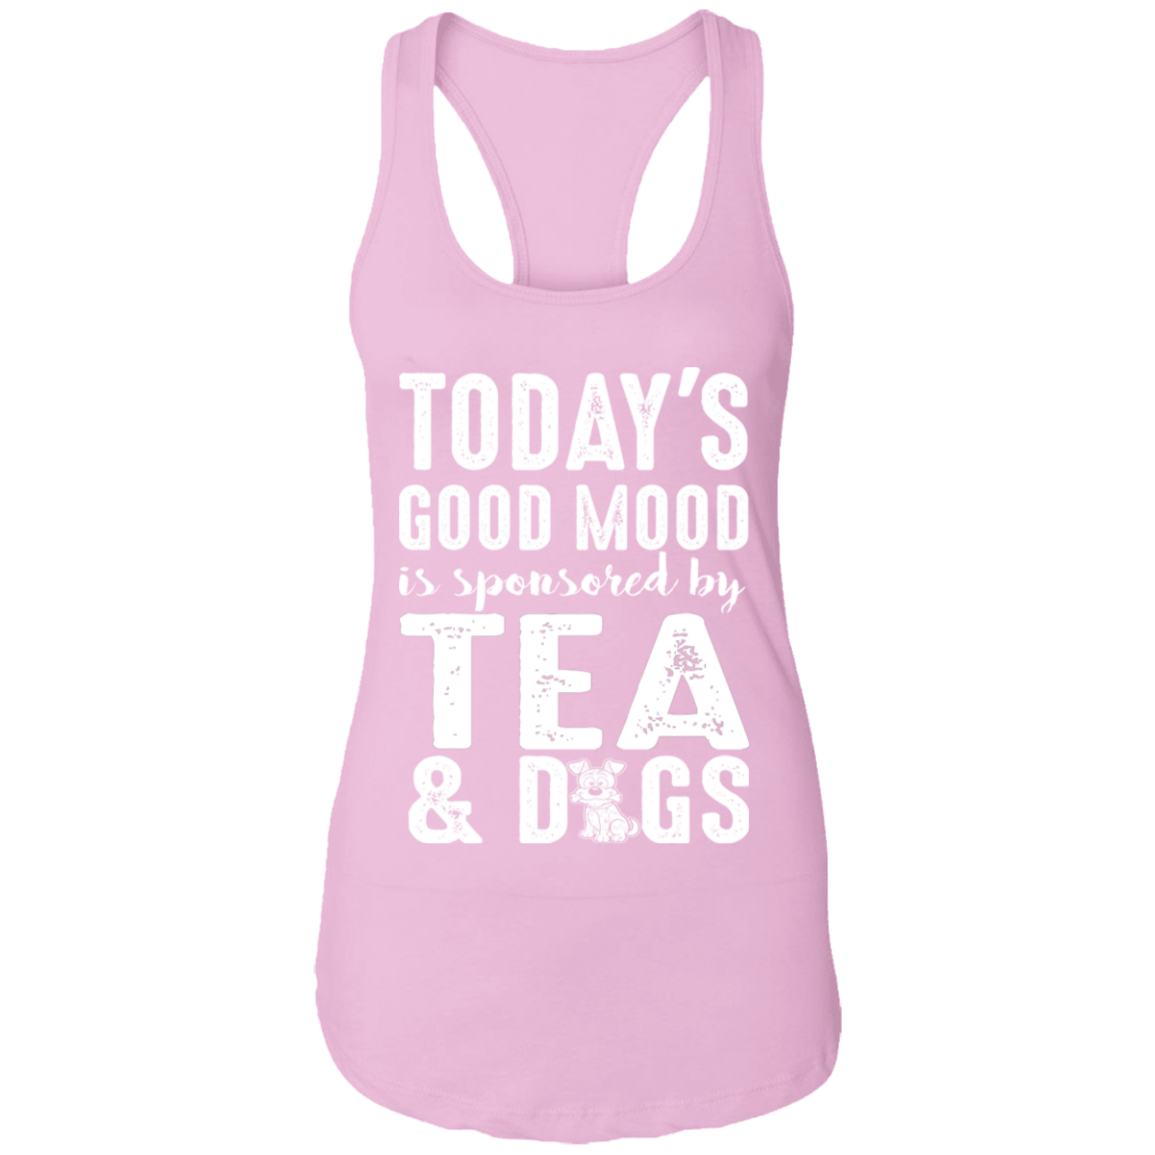 Today's Good Mood Tea & Dogs - Ladies Racer Back Tank.